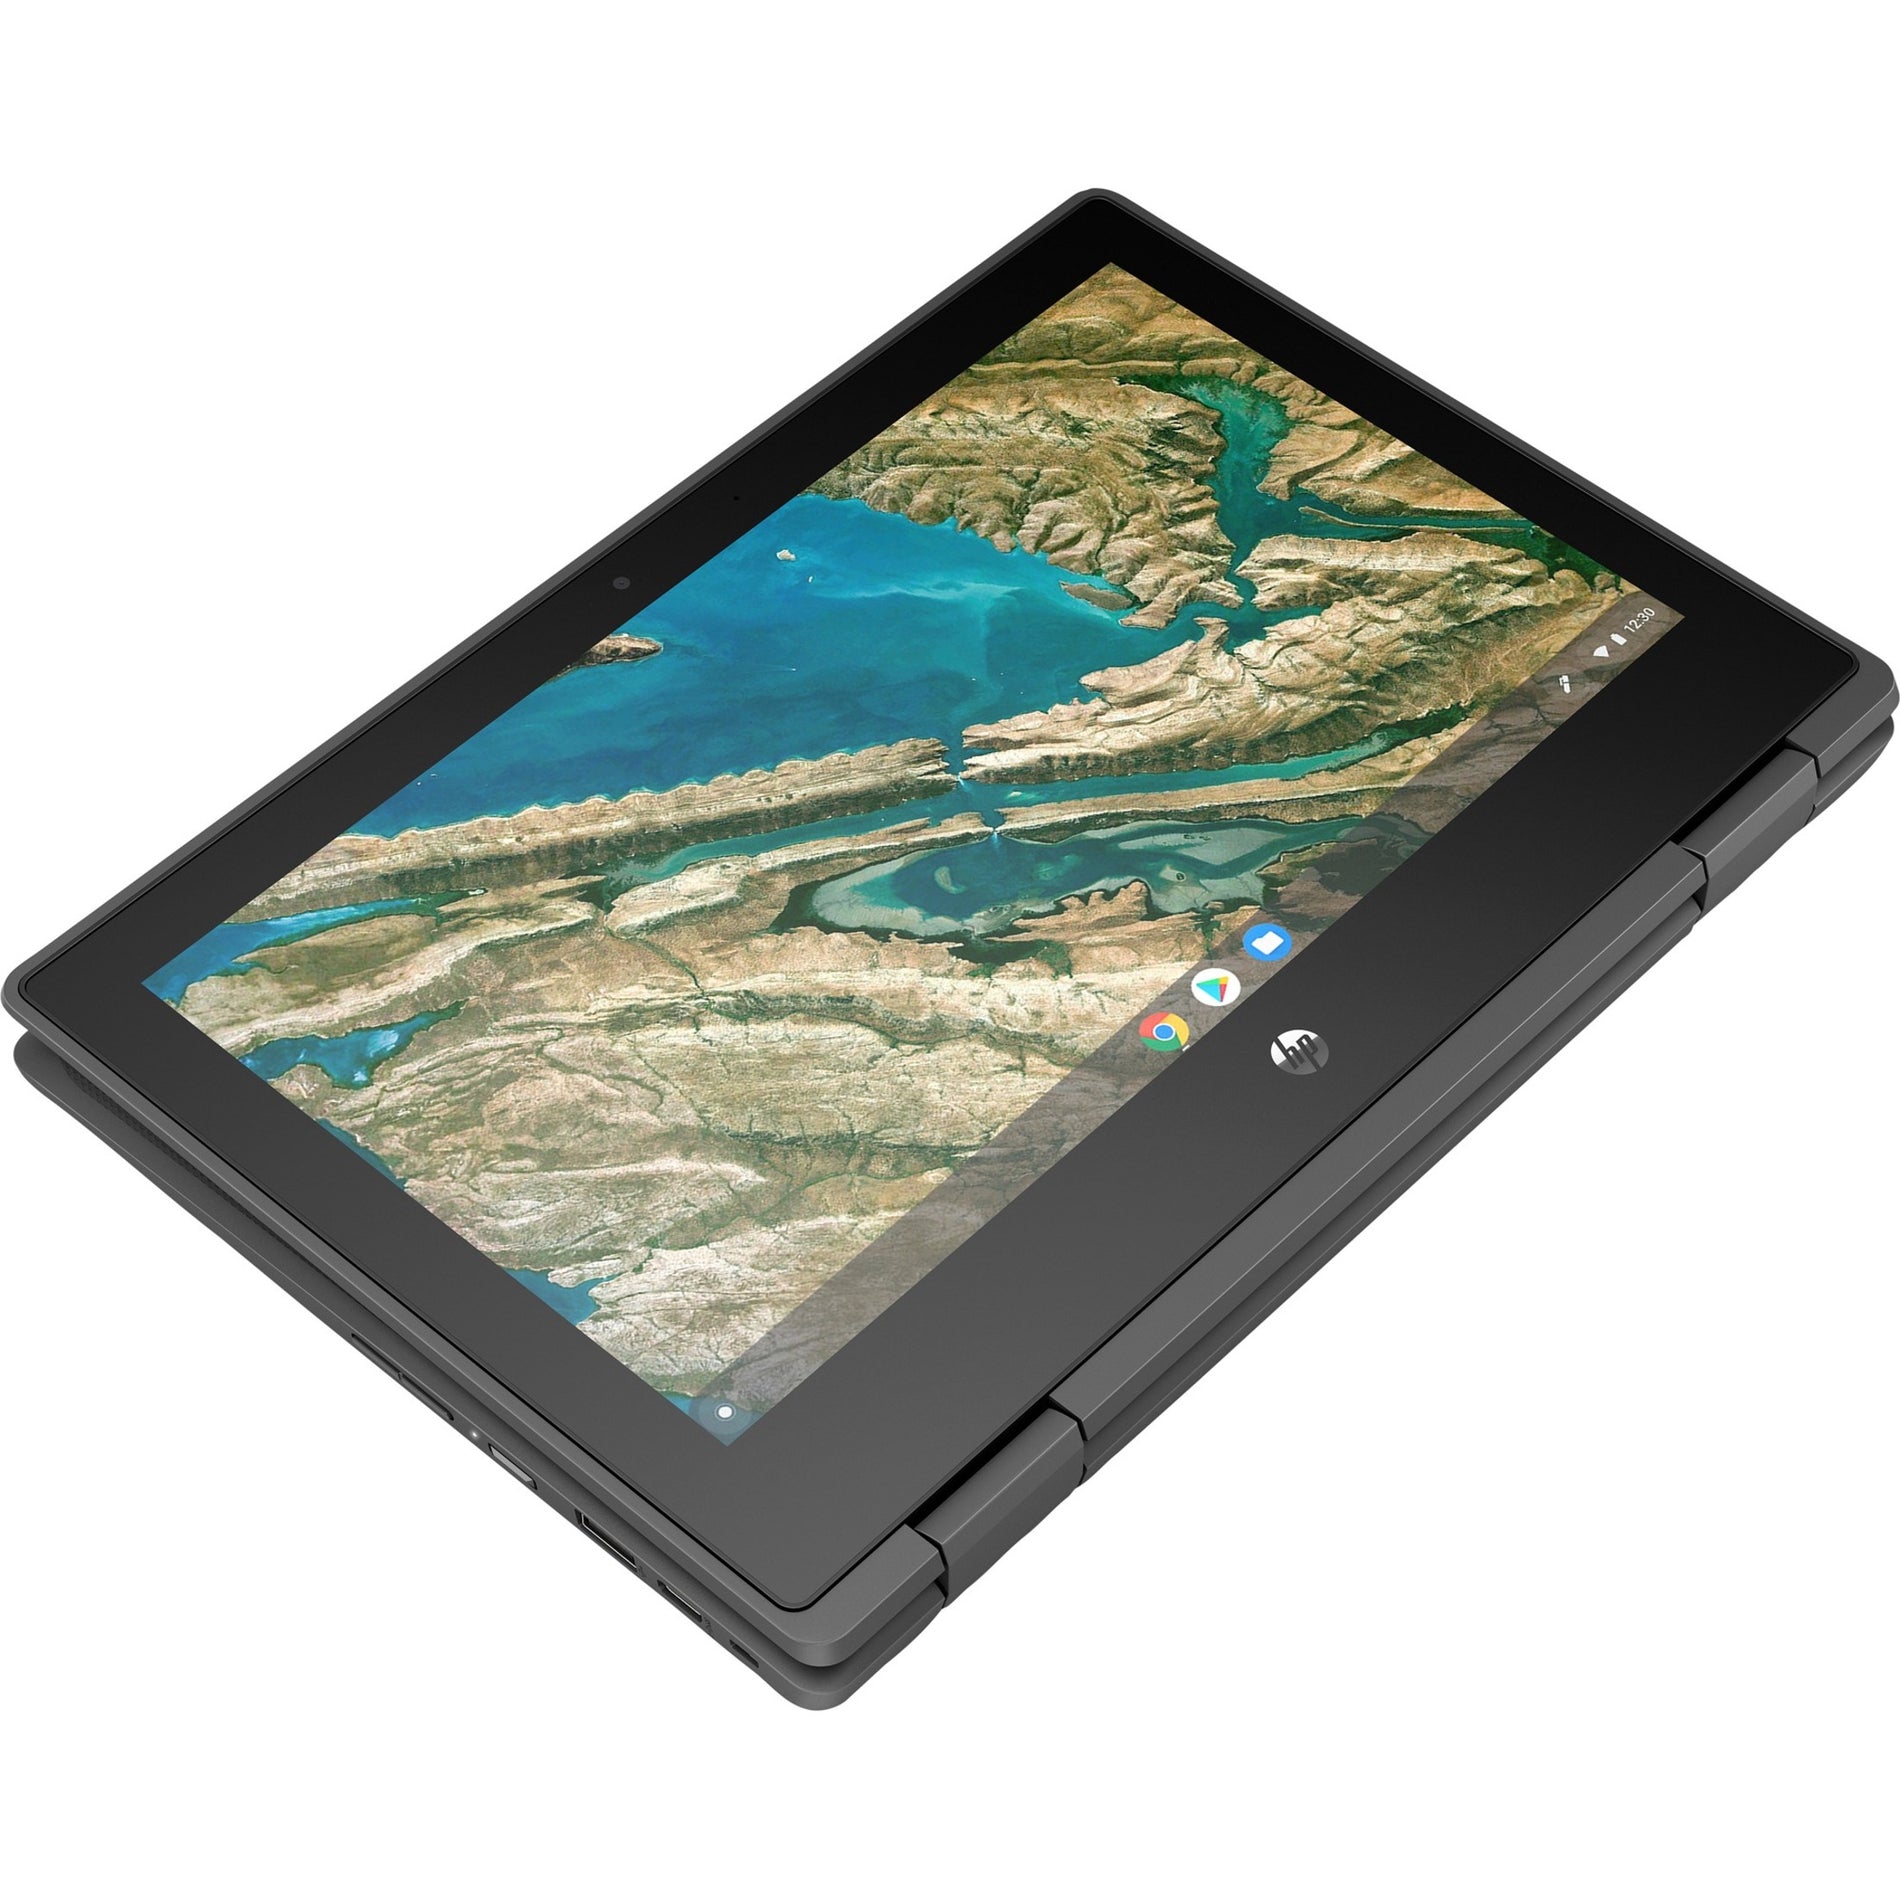 HP Chromebook x360 11 G3 EE 2 in 1 Chromebook, 11.6" Touchscreen, Intel Celeron N4020, 4GB RAM, 32GB Flash Memory